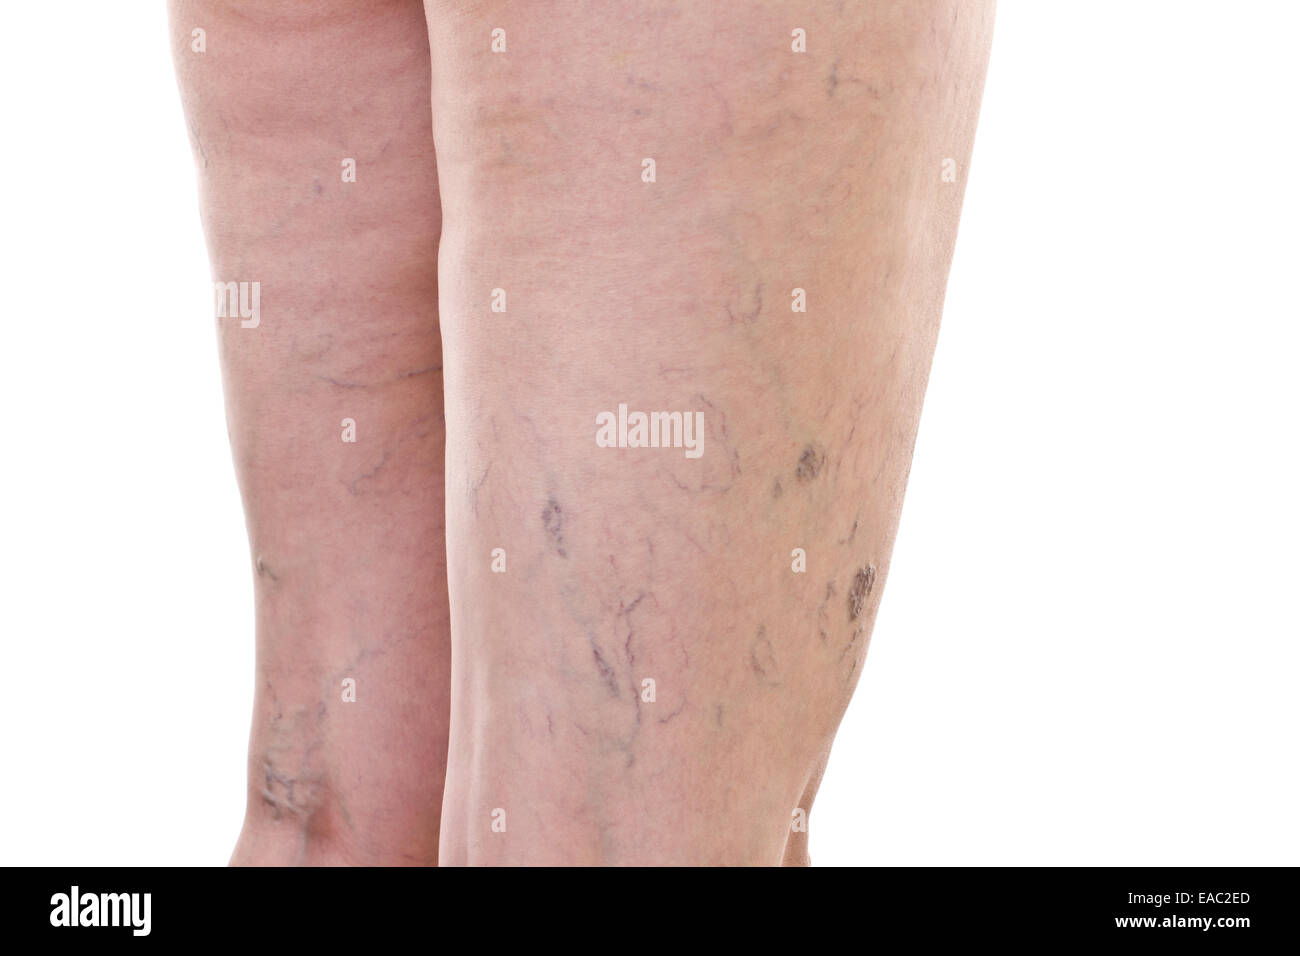 Legs with varicose veins Stock Photo